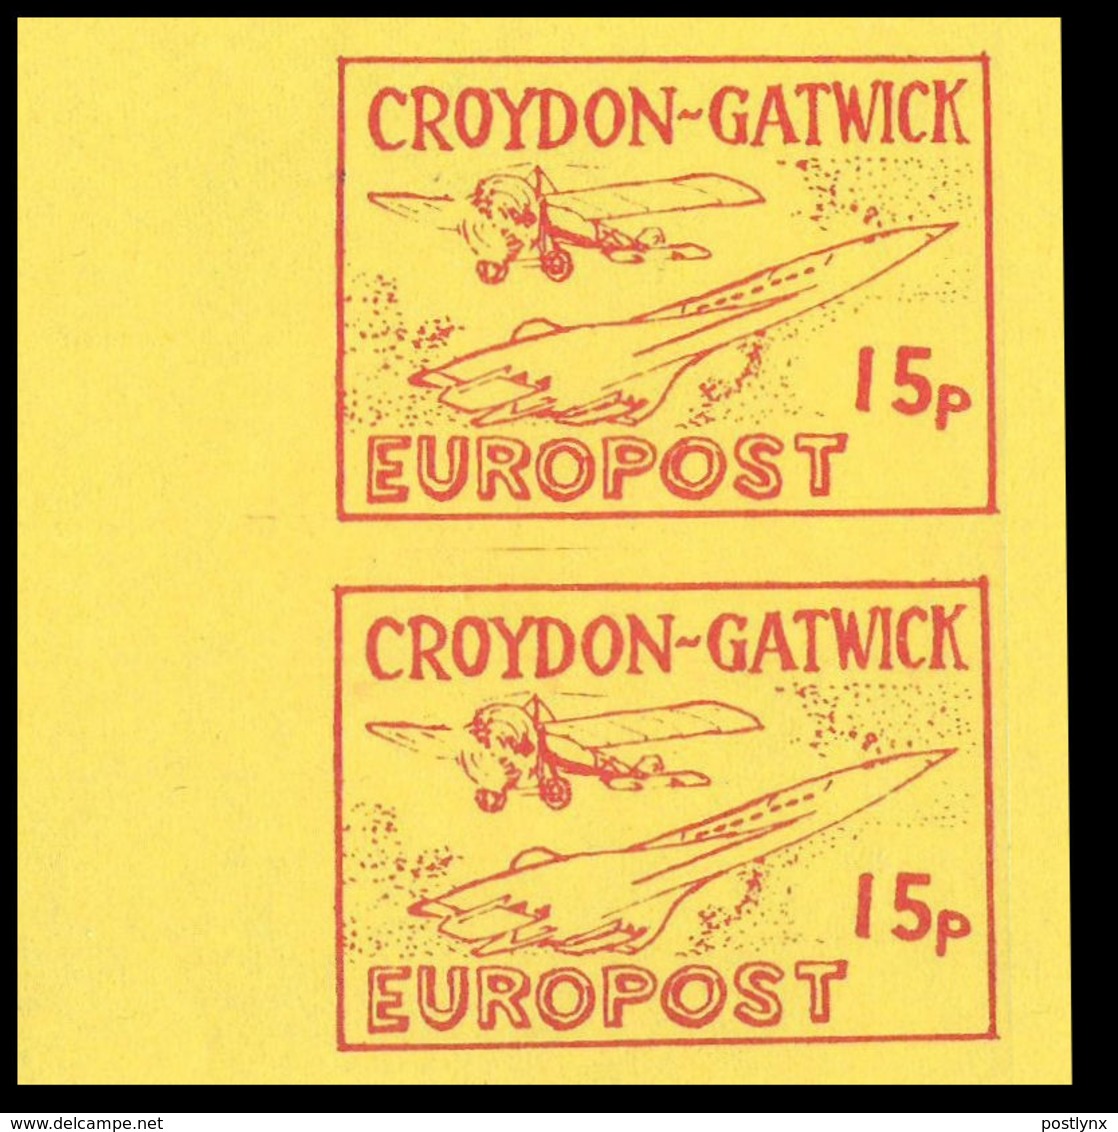 GREAT BRITAIN-Croydon Gatwick 1971 Aeroplane Concorde 15p #1 Large MARG.PAIR PROOF Yellow Paper - Ensayos, Pruebas & Reimpresiones